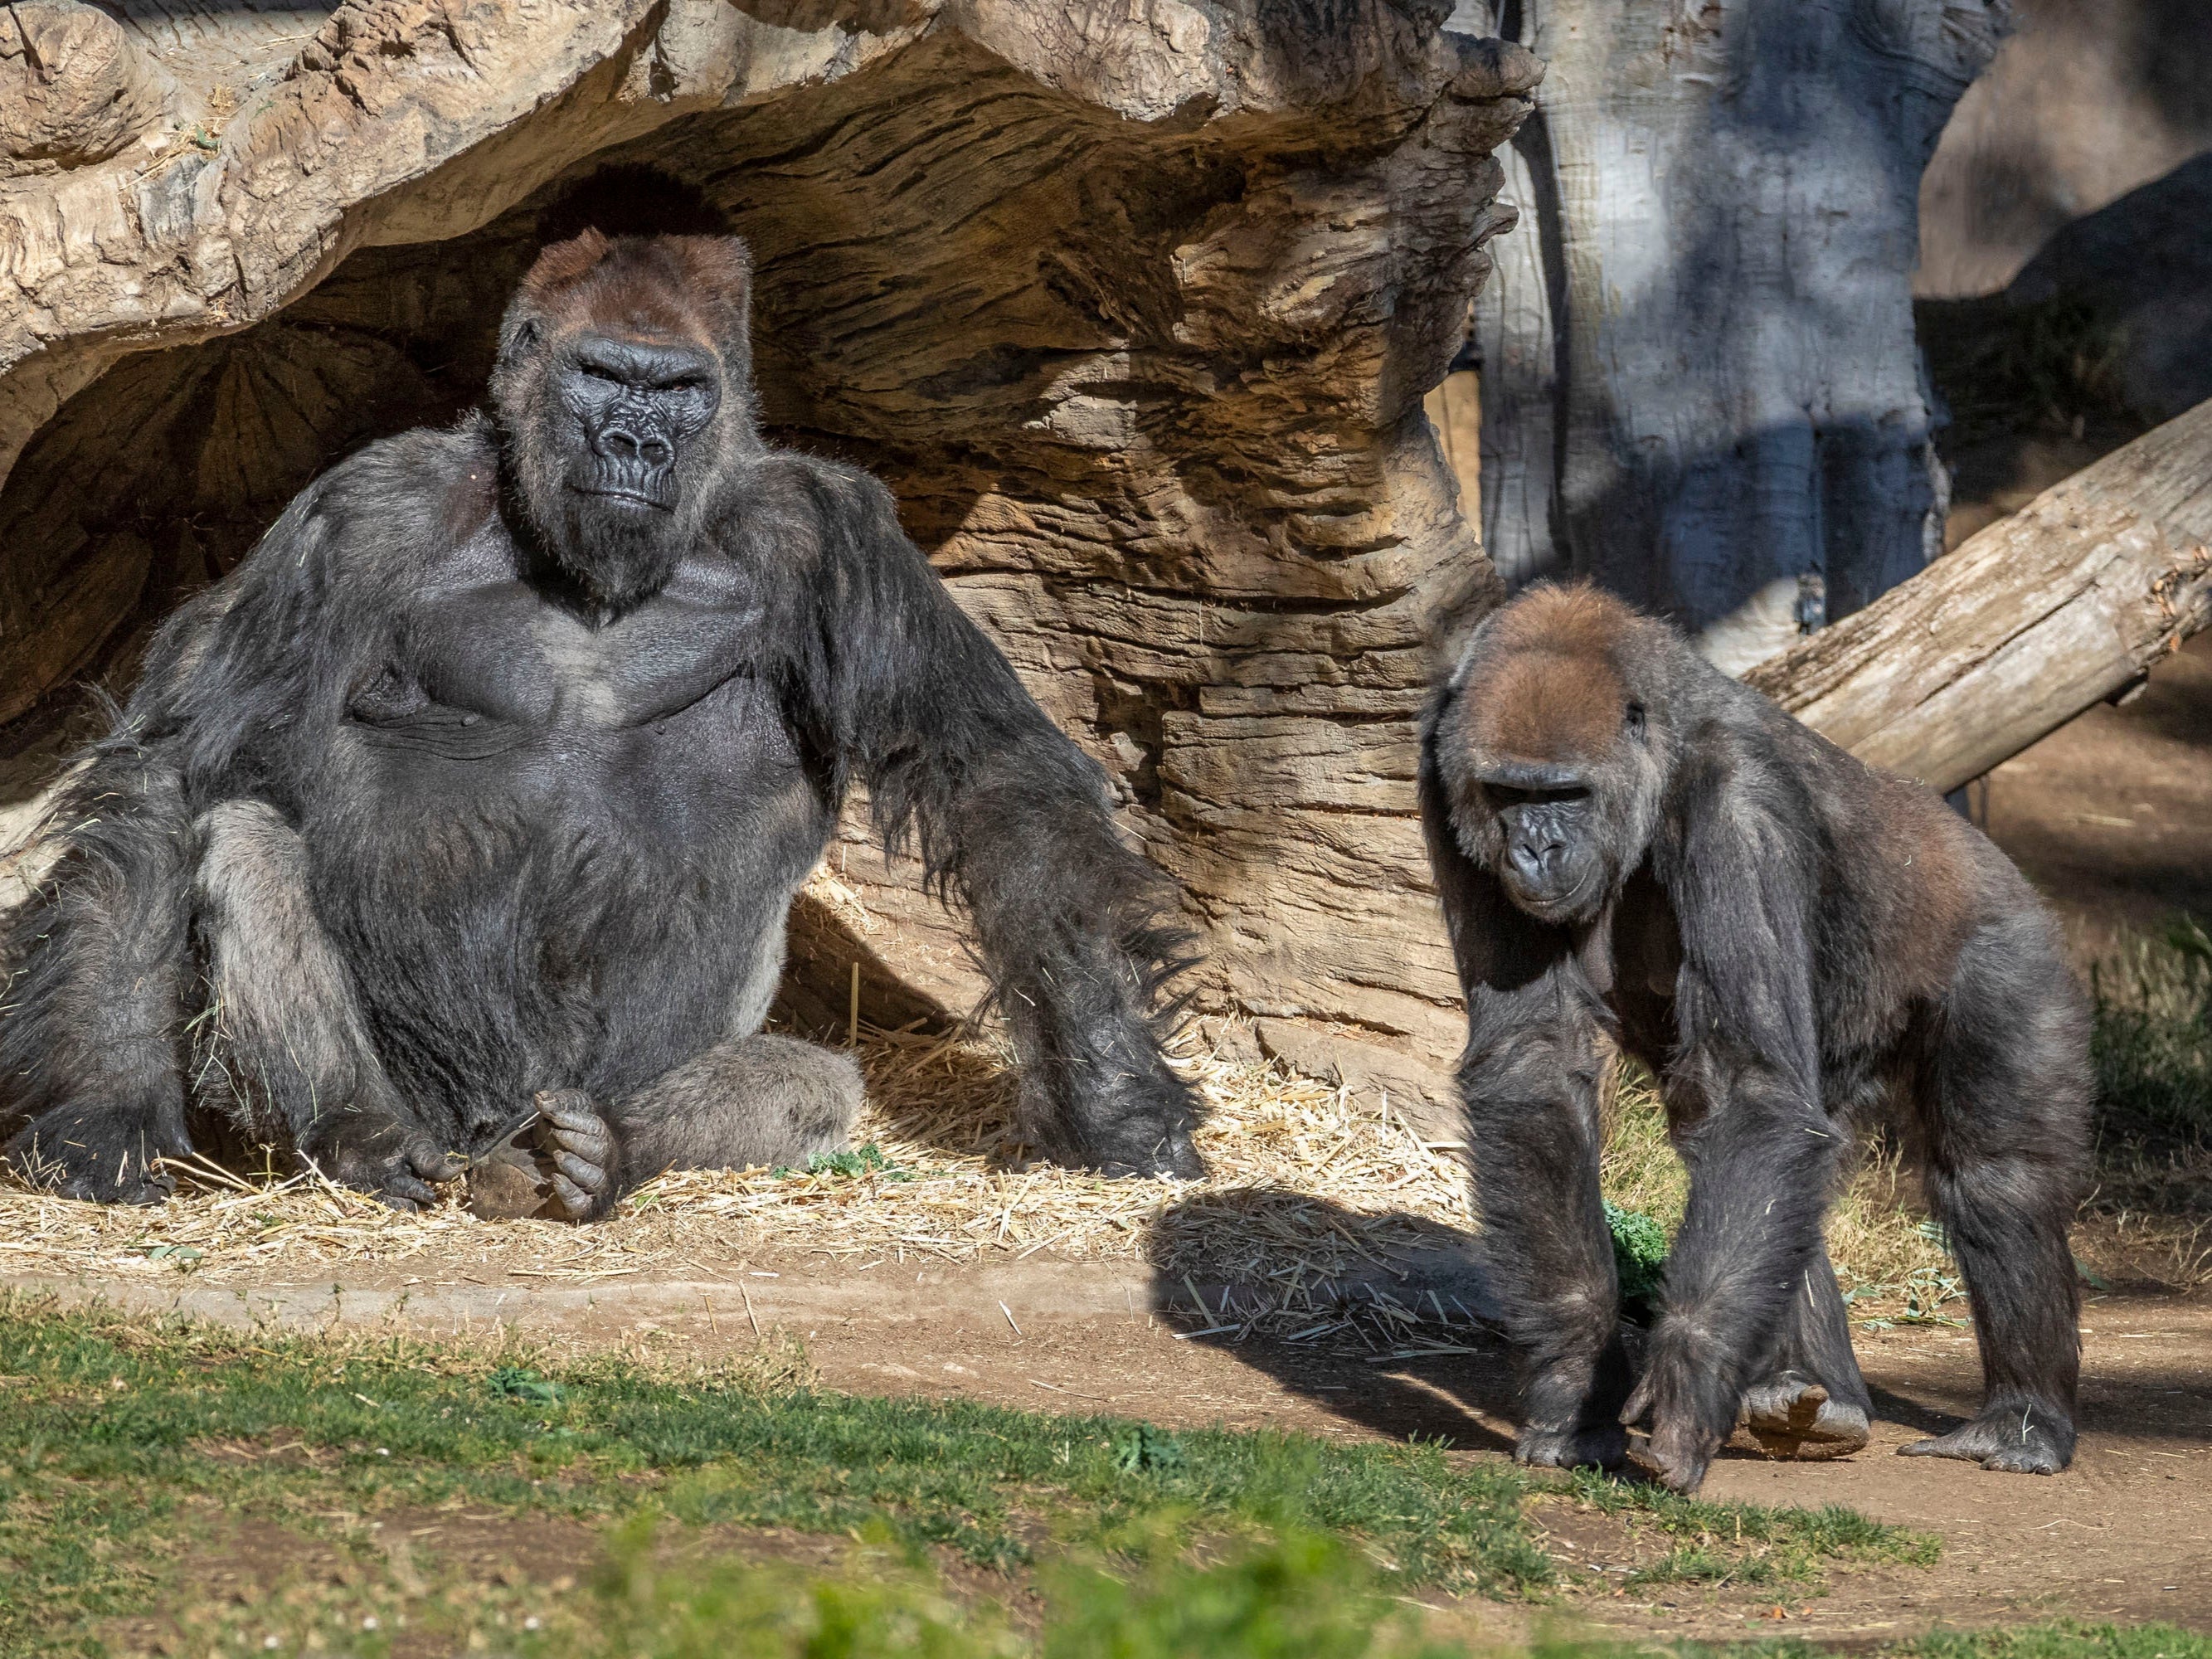 The gorilla troop at the San Diego Zoo Safari Park in Escondido, California.&nbsp;